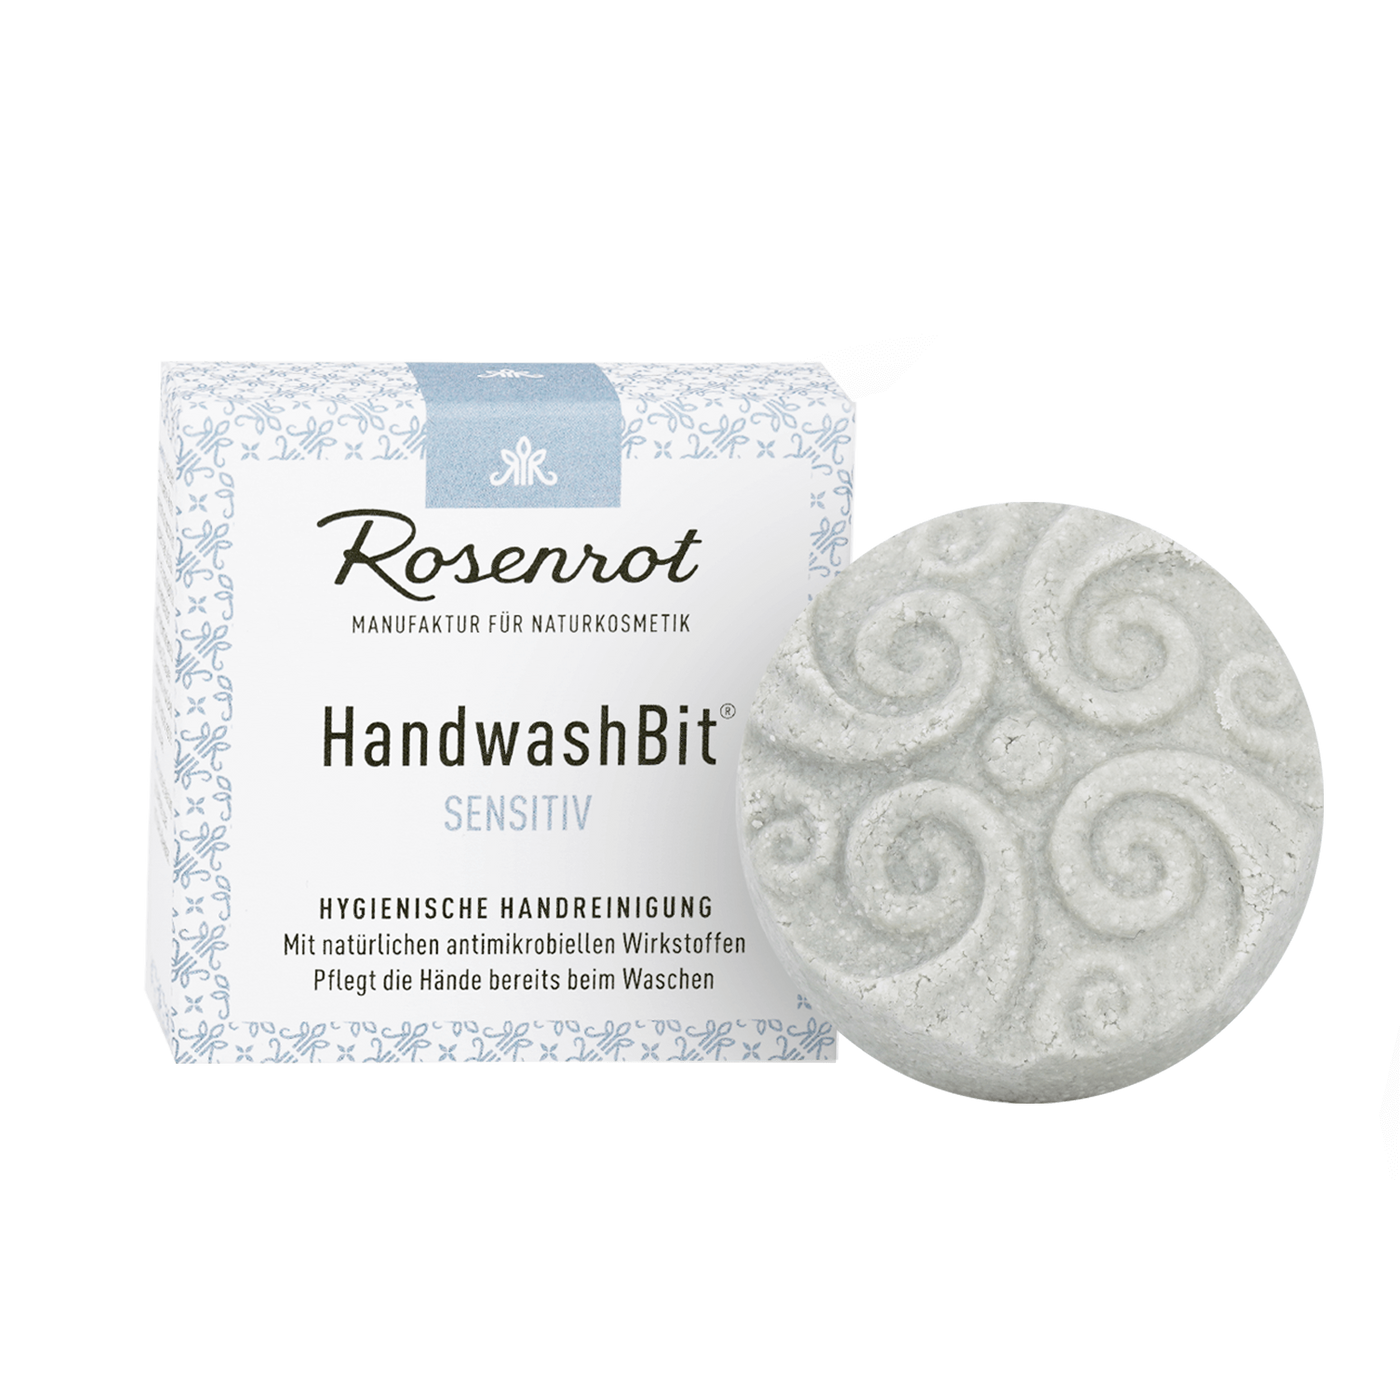 HandwashBit® Sensitiv